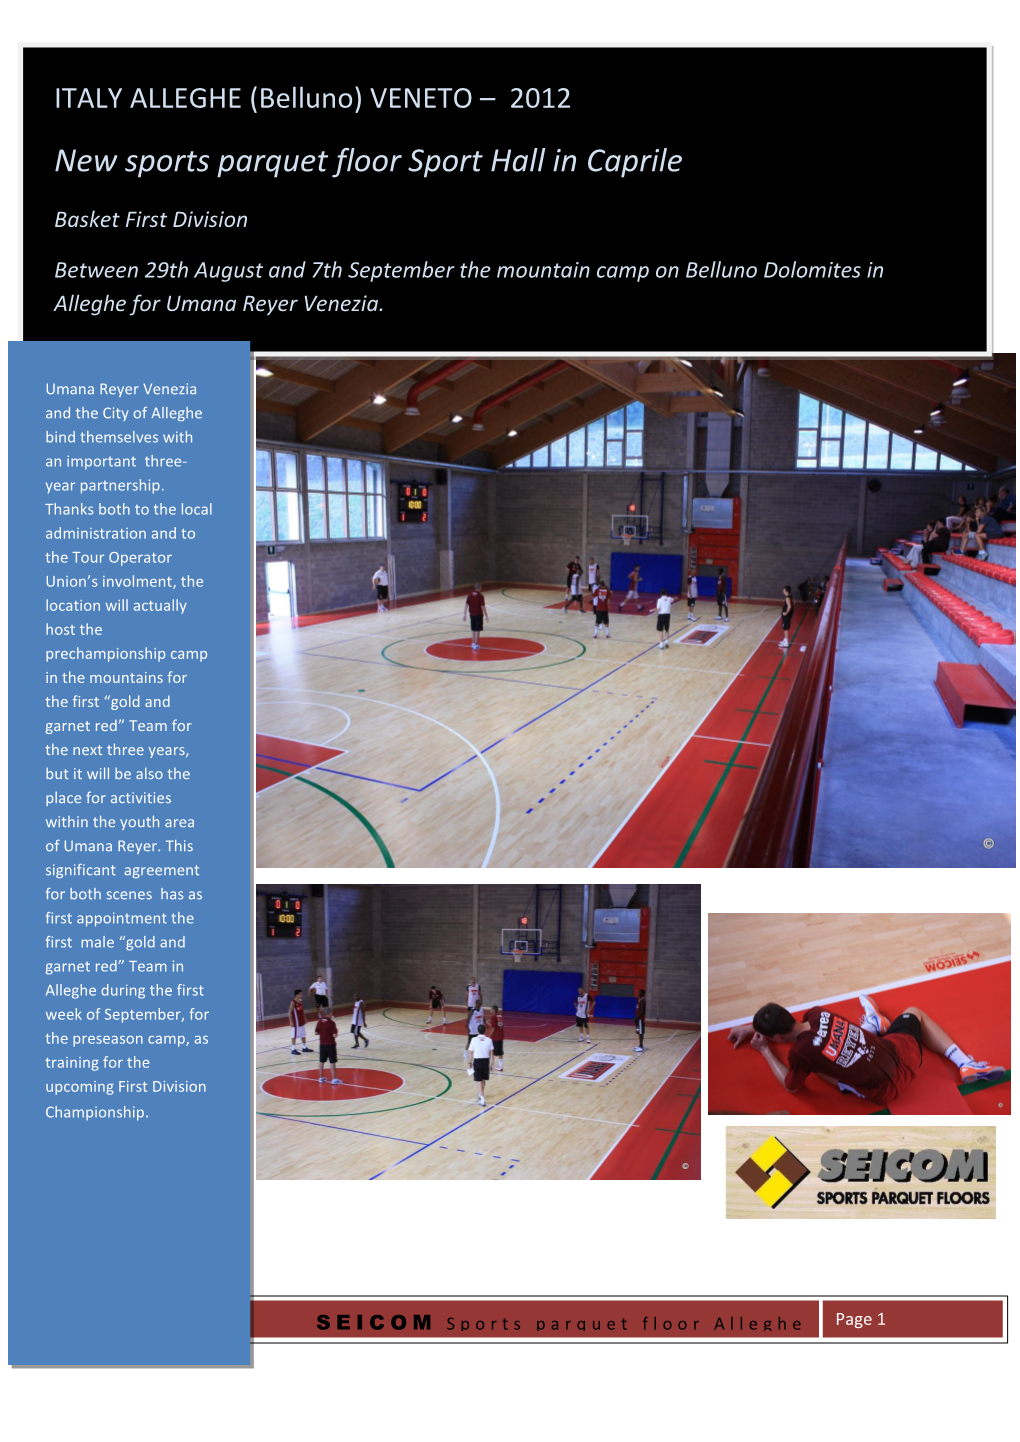 New Sports Parquet Floor Sport Hall in Caprile